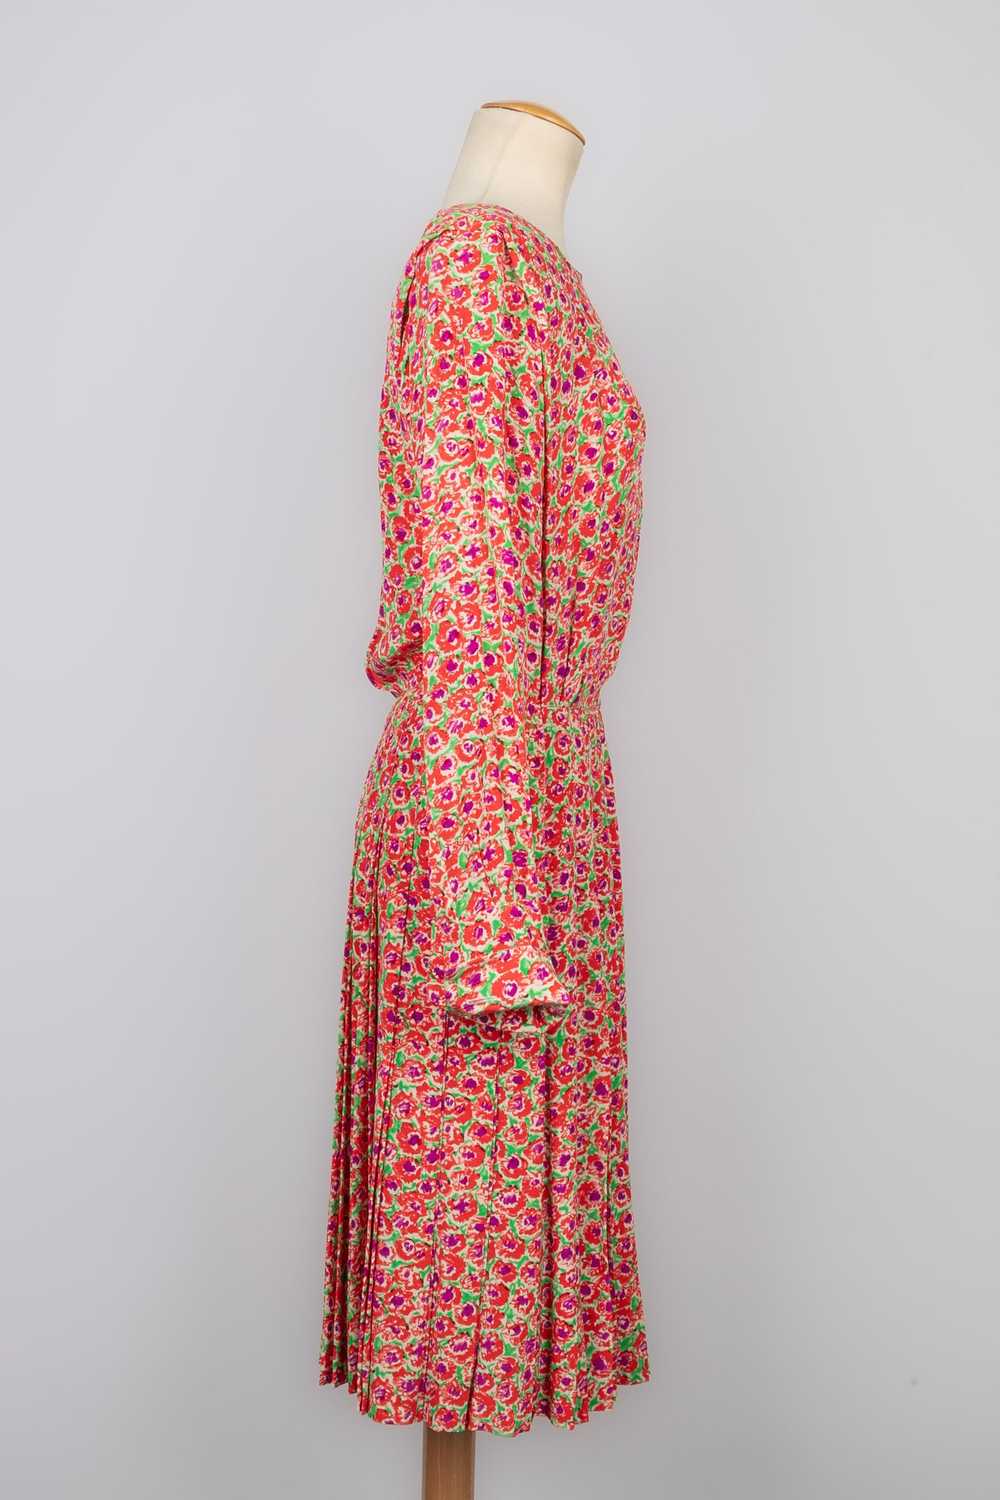 Yves Saint Laurent silk dress 1989 - image 4